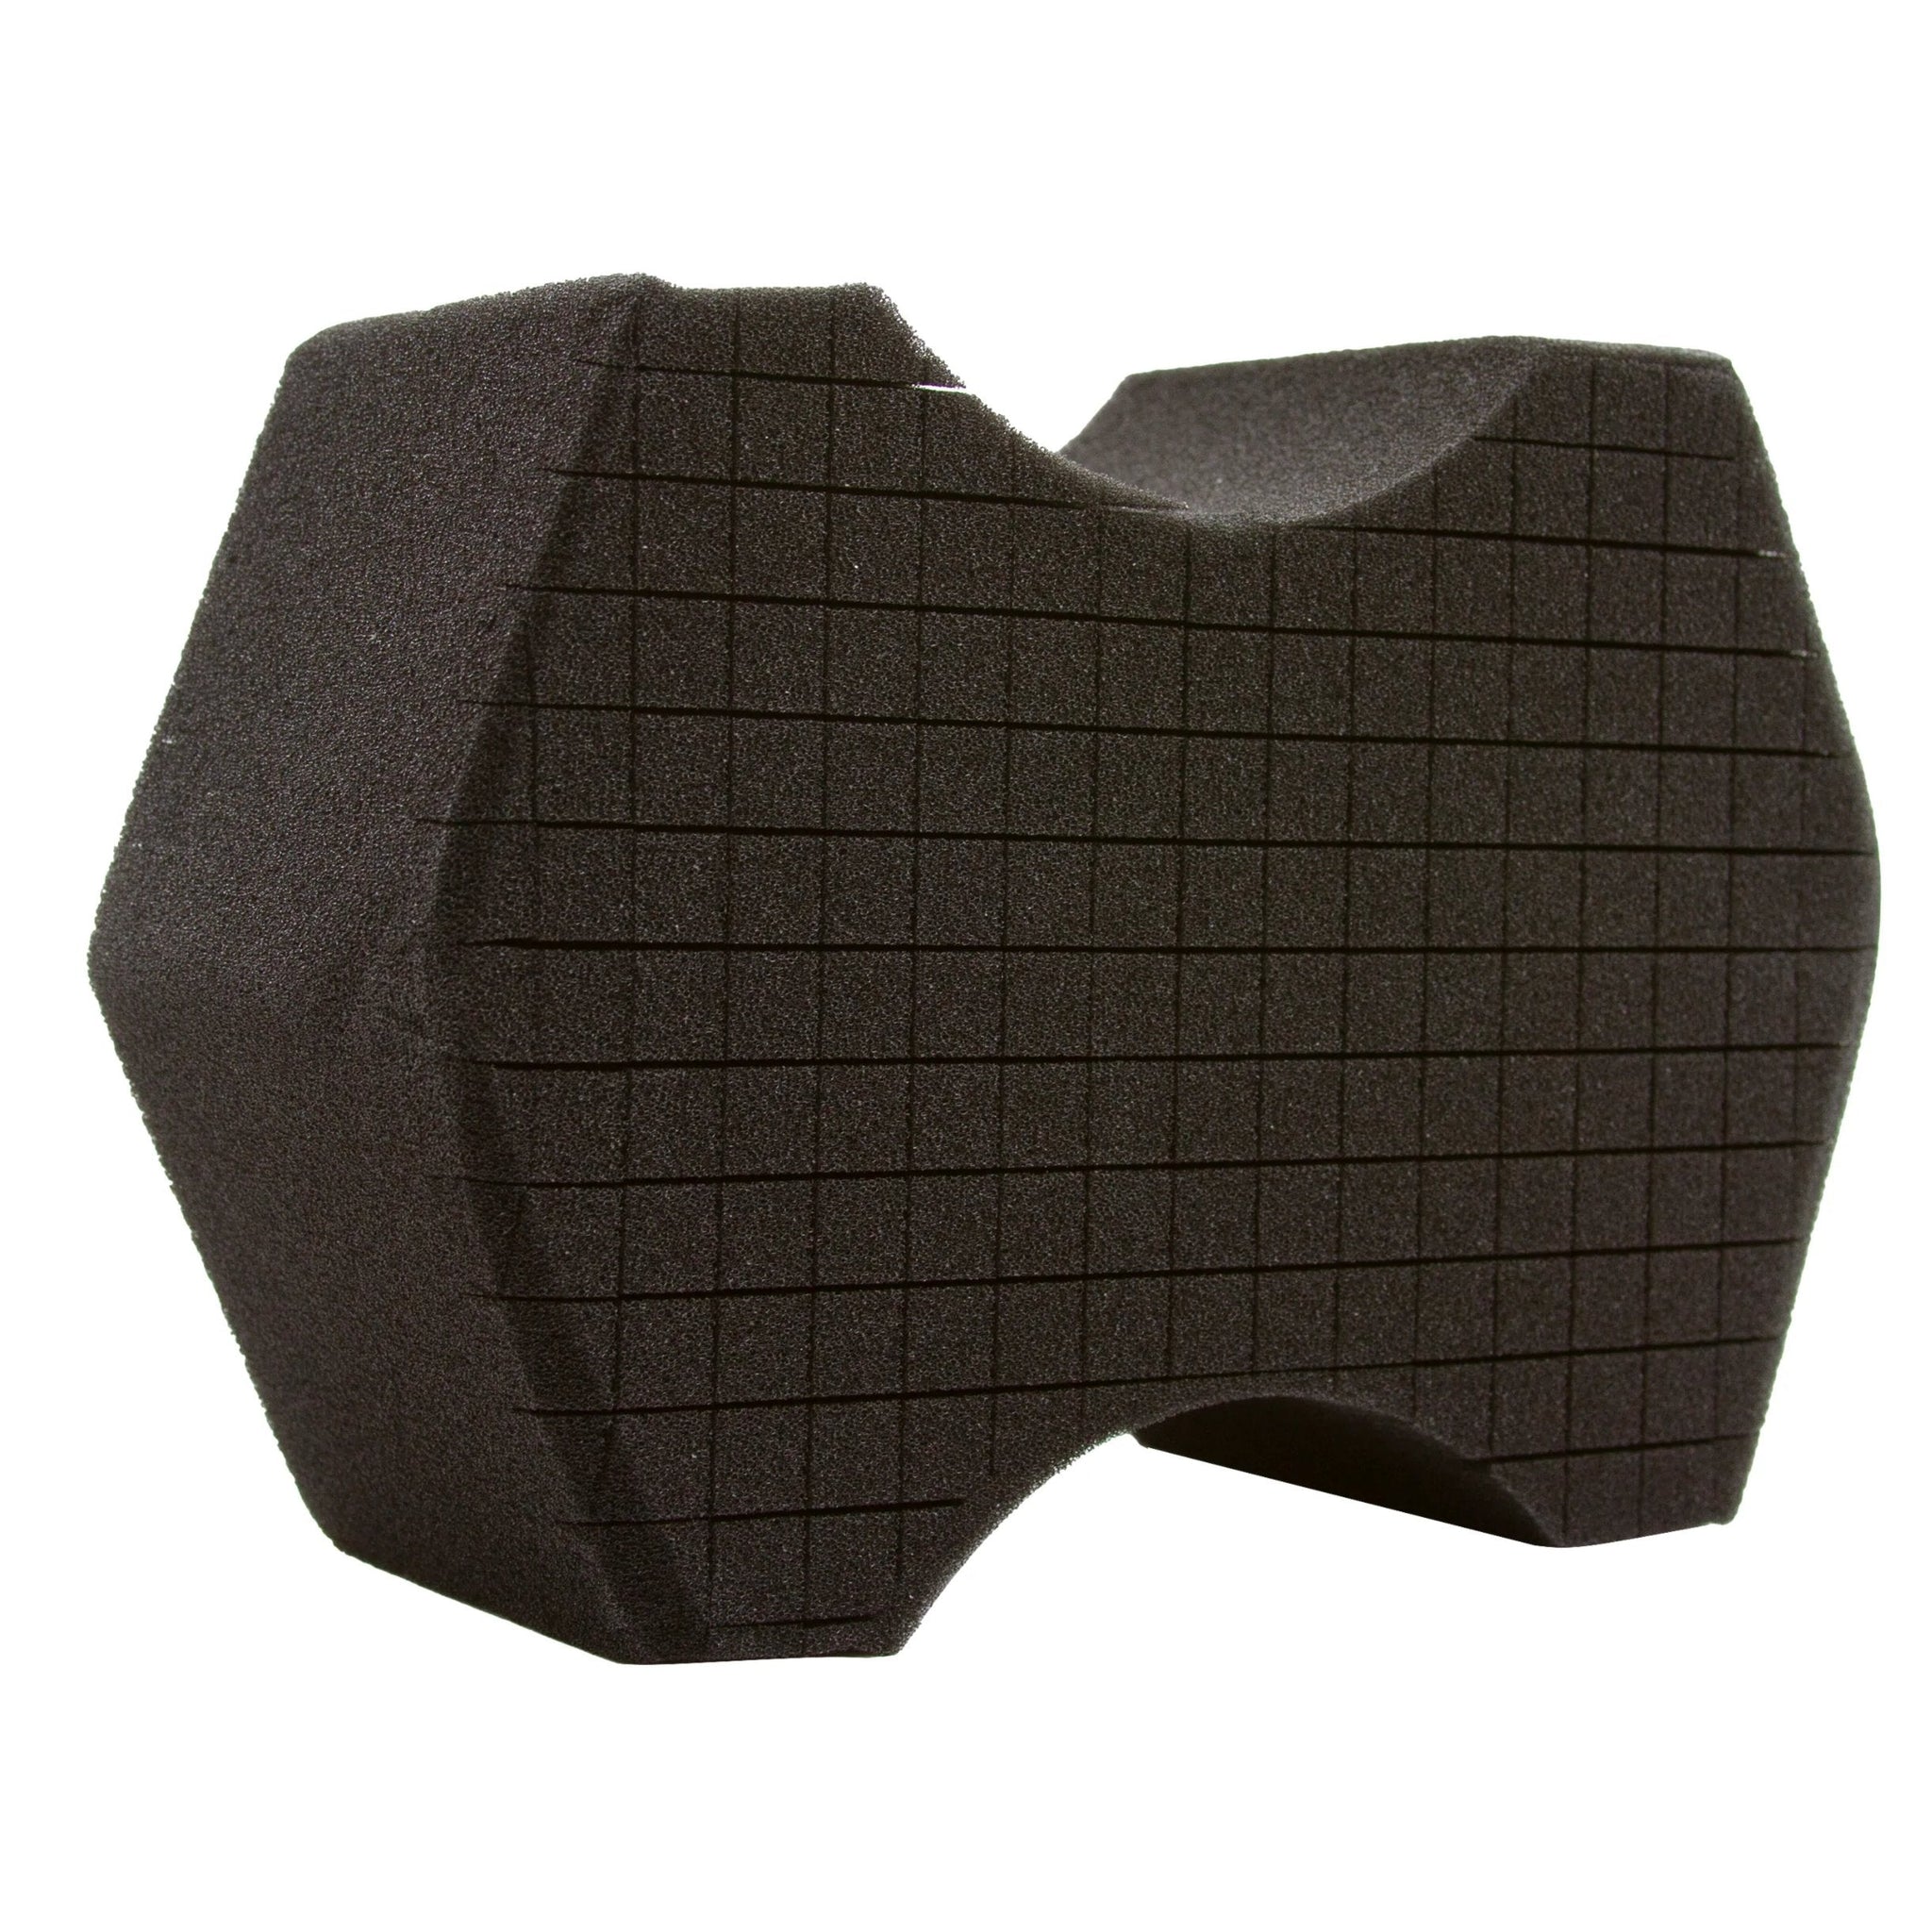 2 Pcs Ultra Black Car Wash Sponge Cross Cut Design Foam Sponge Softer Feel  Black Sponge for Soap and Rinseless Washes, Car Detailing and Washing